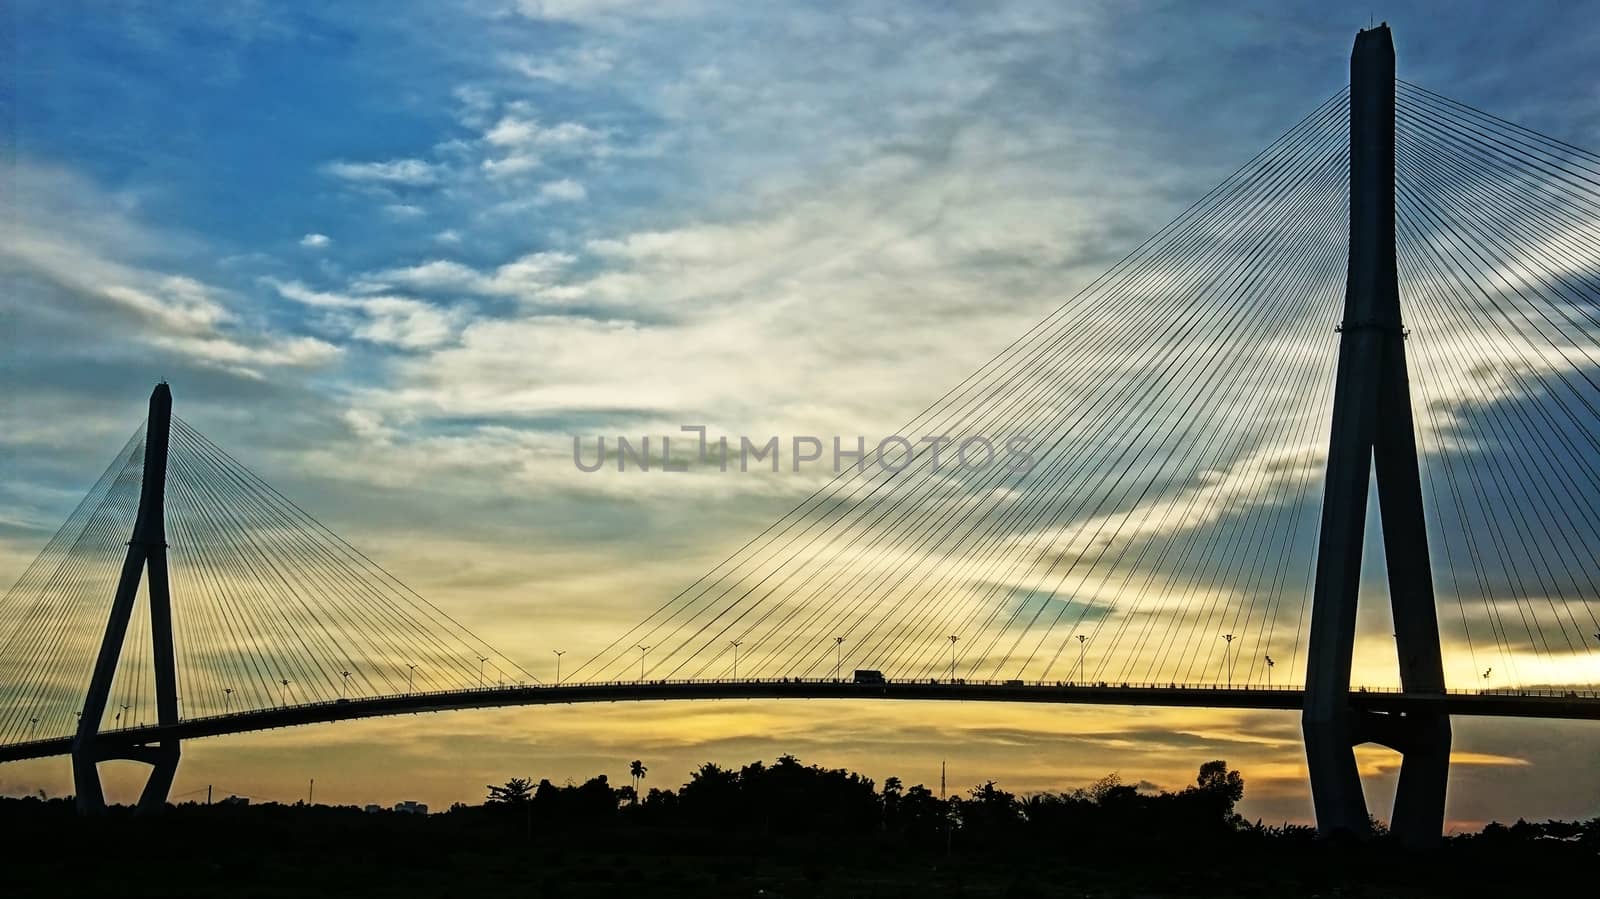 Can Tho Bridge by xuanhuongho